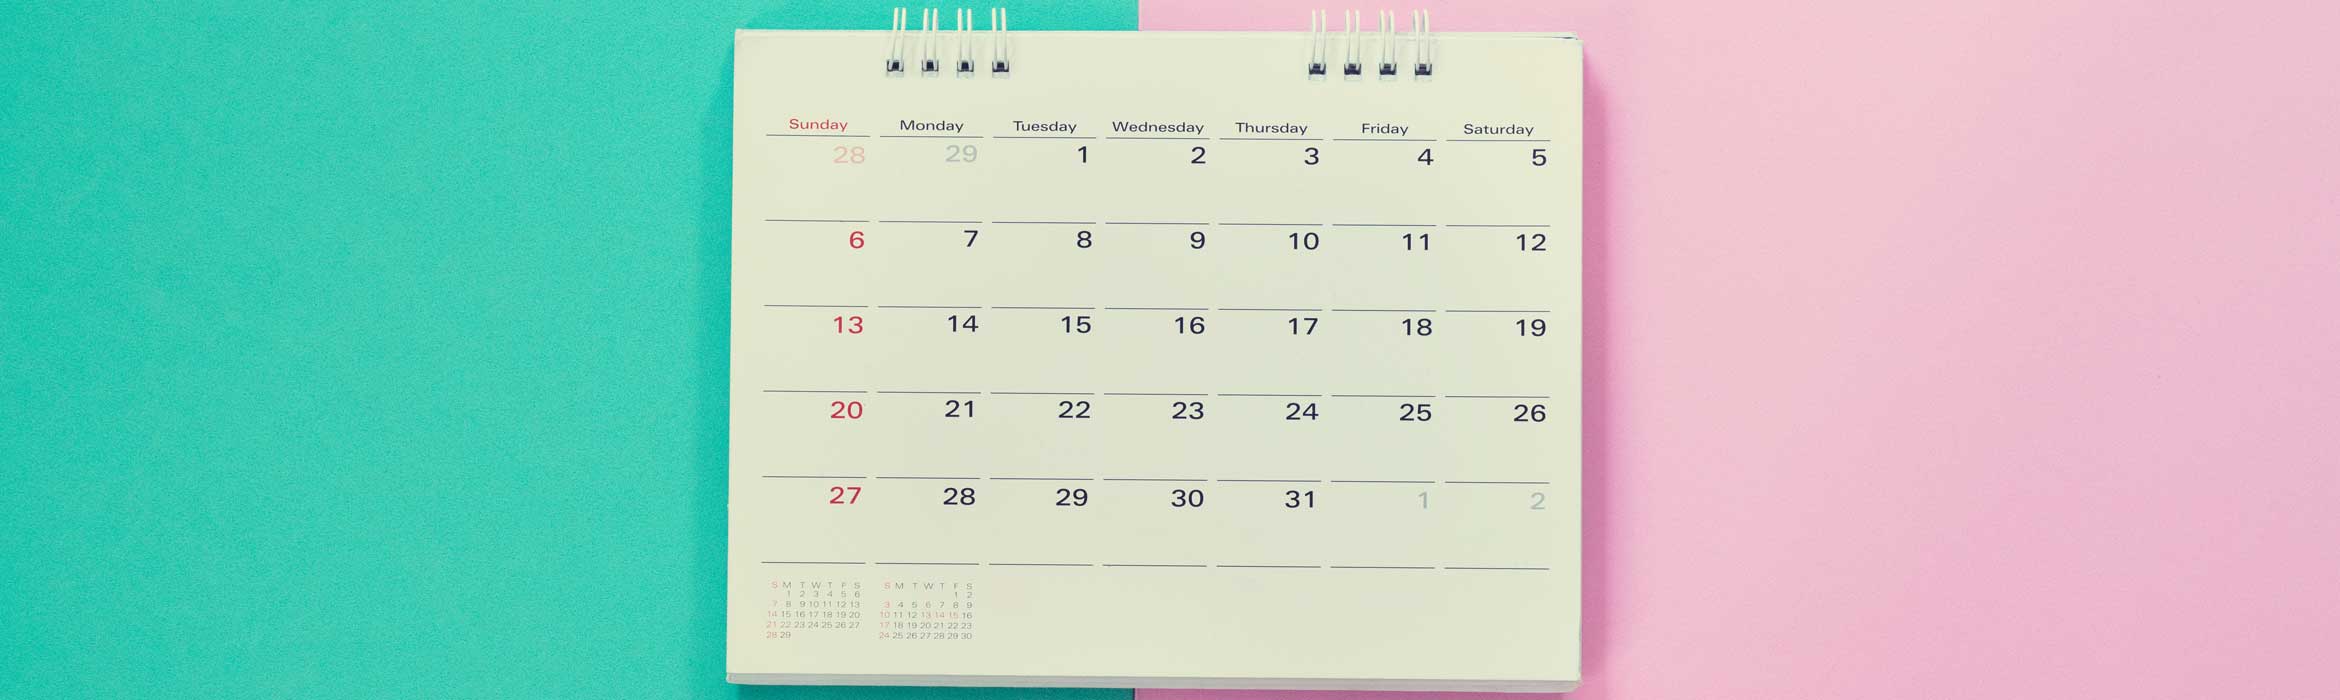 Contentkalender